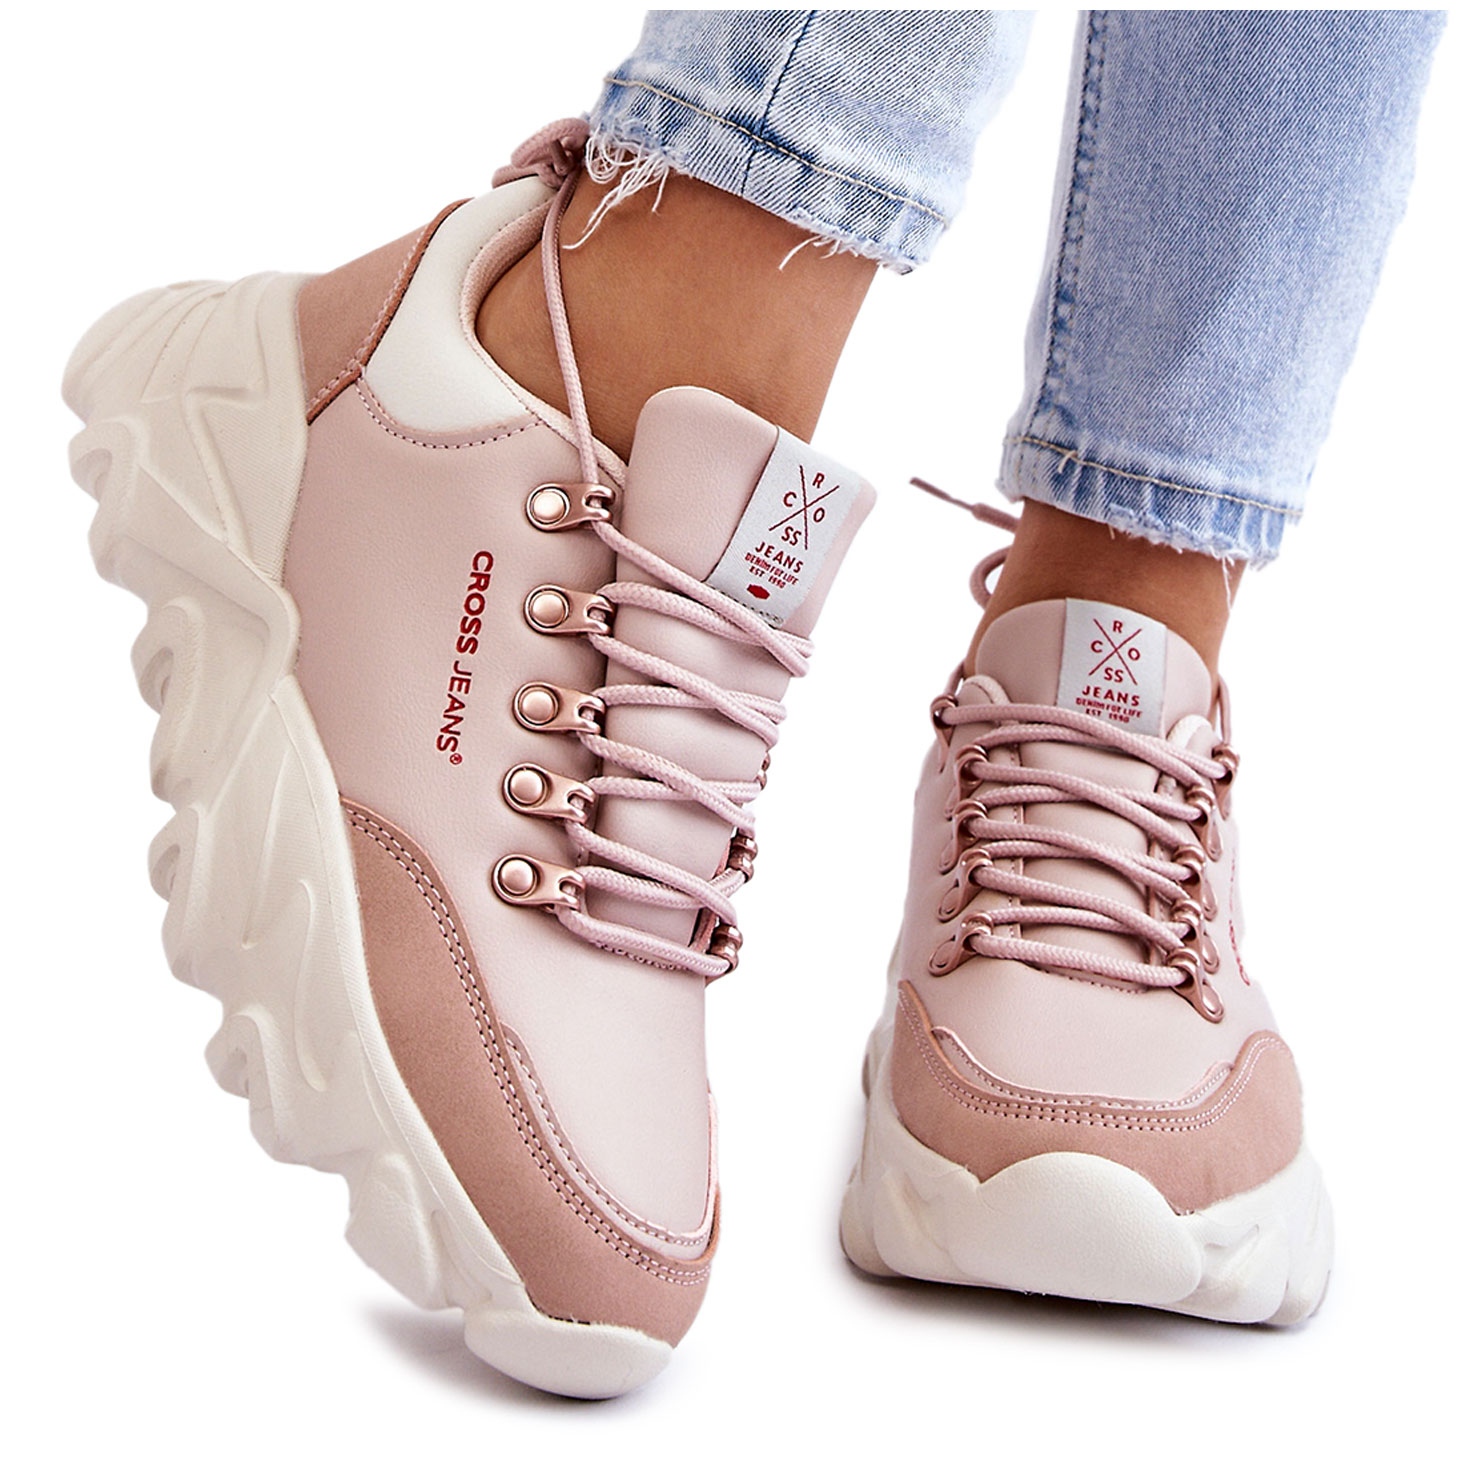 jul Ooze Erklæring Women's Platform Sneakers Cross Jeans KK2R4072C Nude pink - KeeShoes